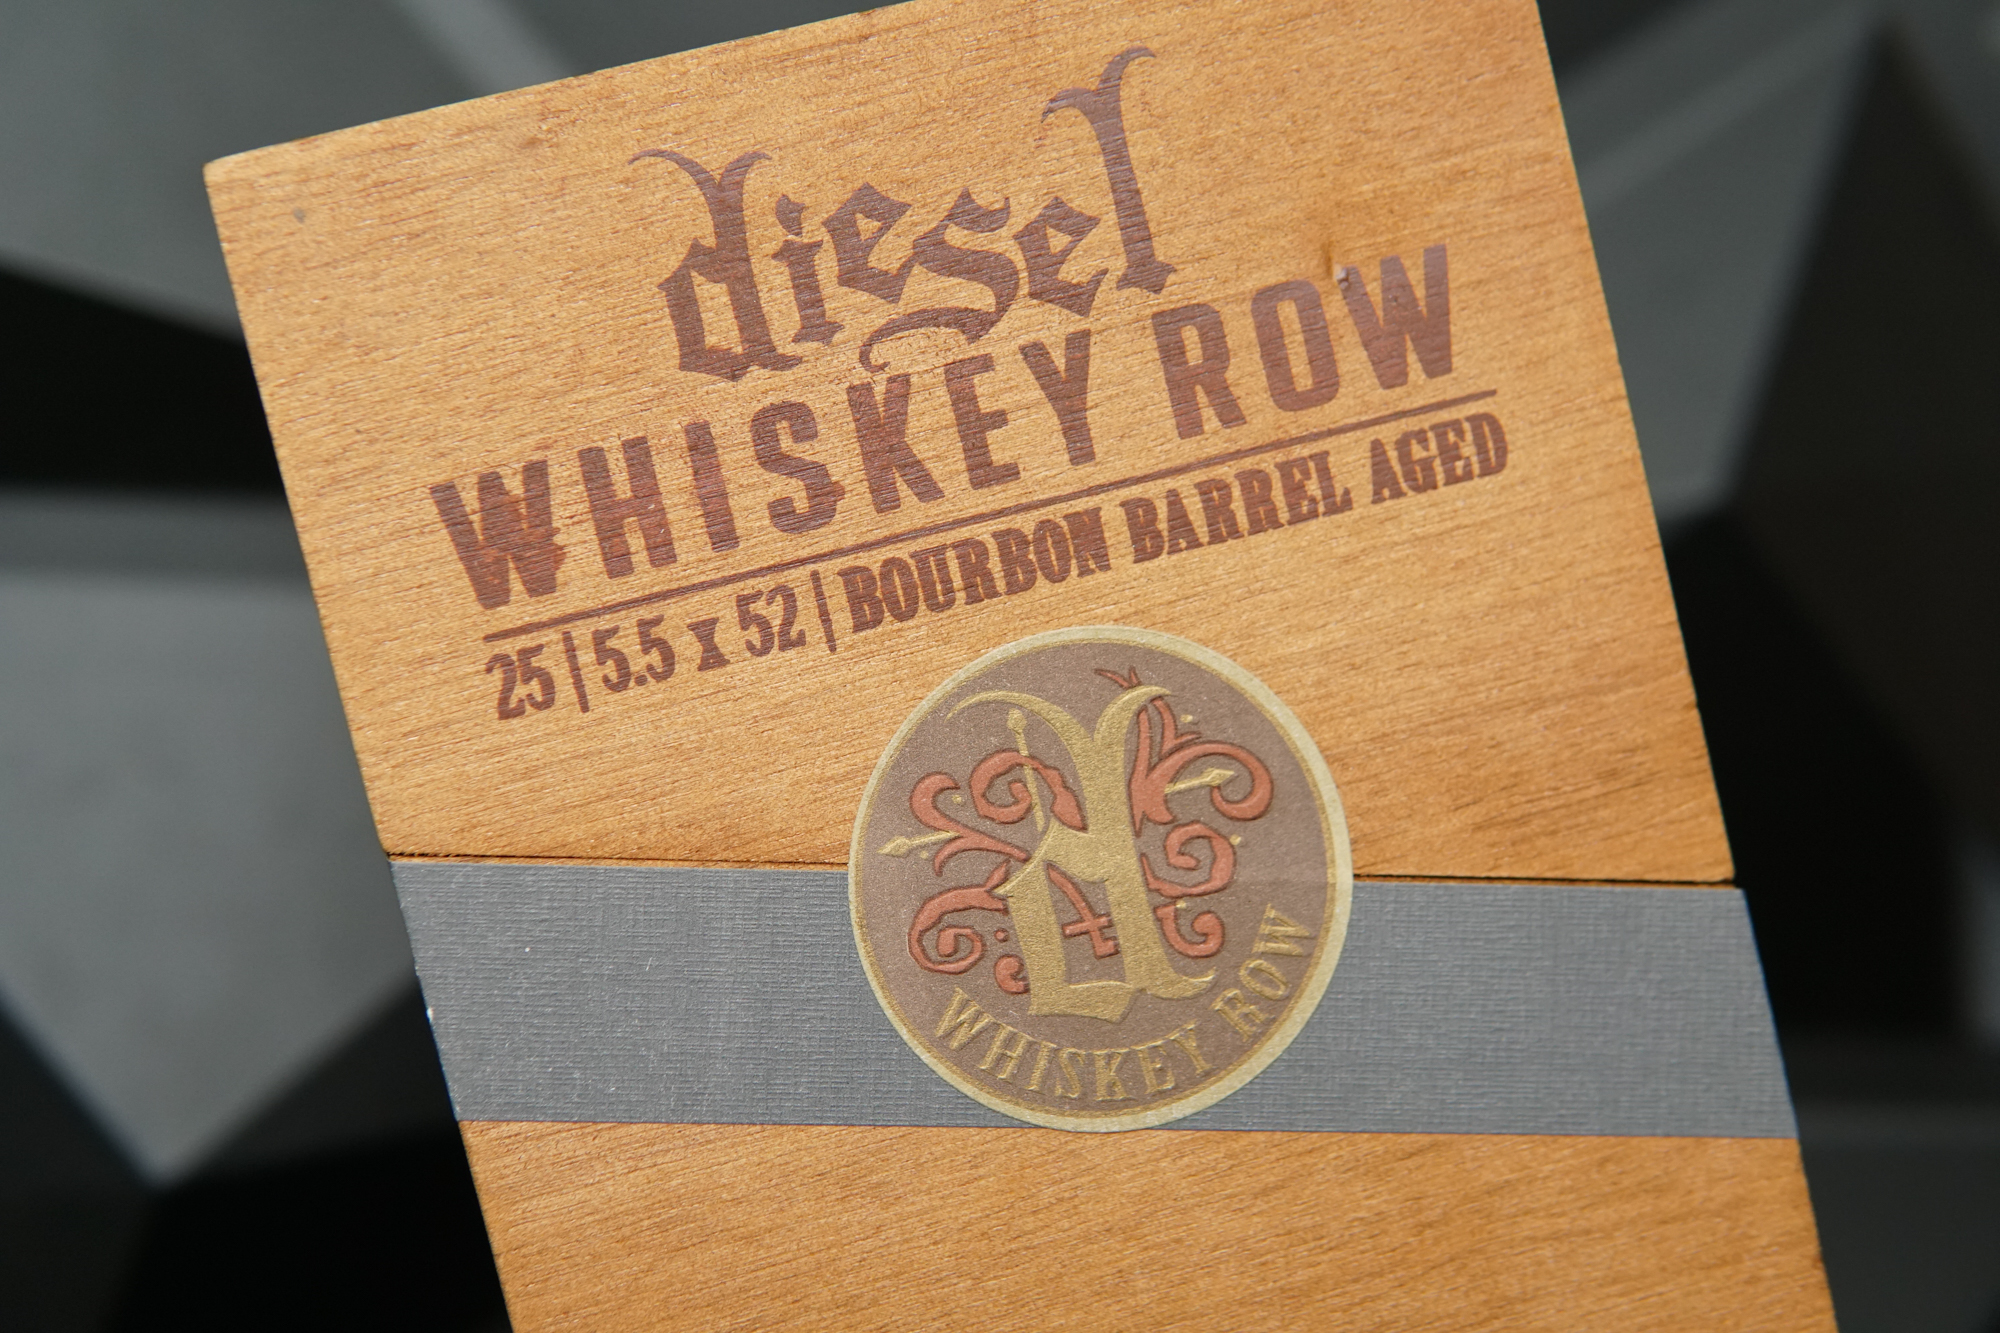 Diesel Whiskey Row Bourbon Barrel Aged Toro Cigar Pack Of 25 Cigars